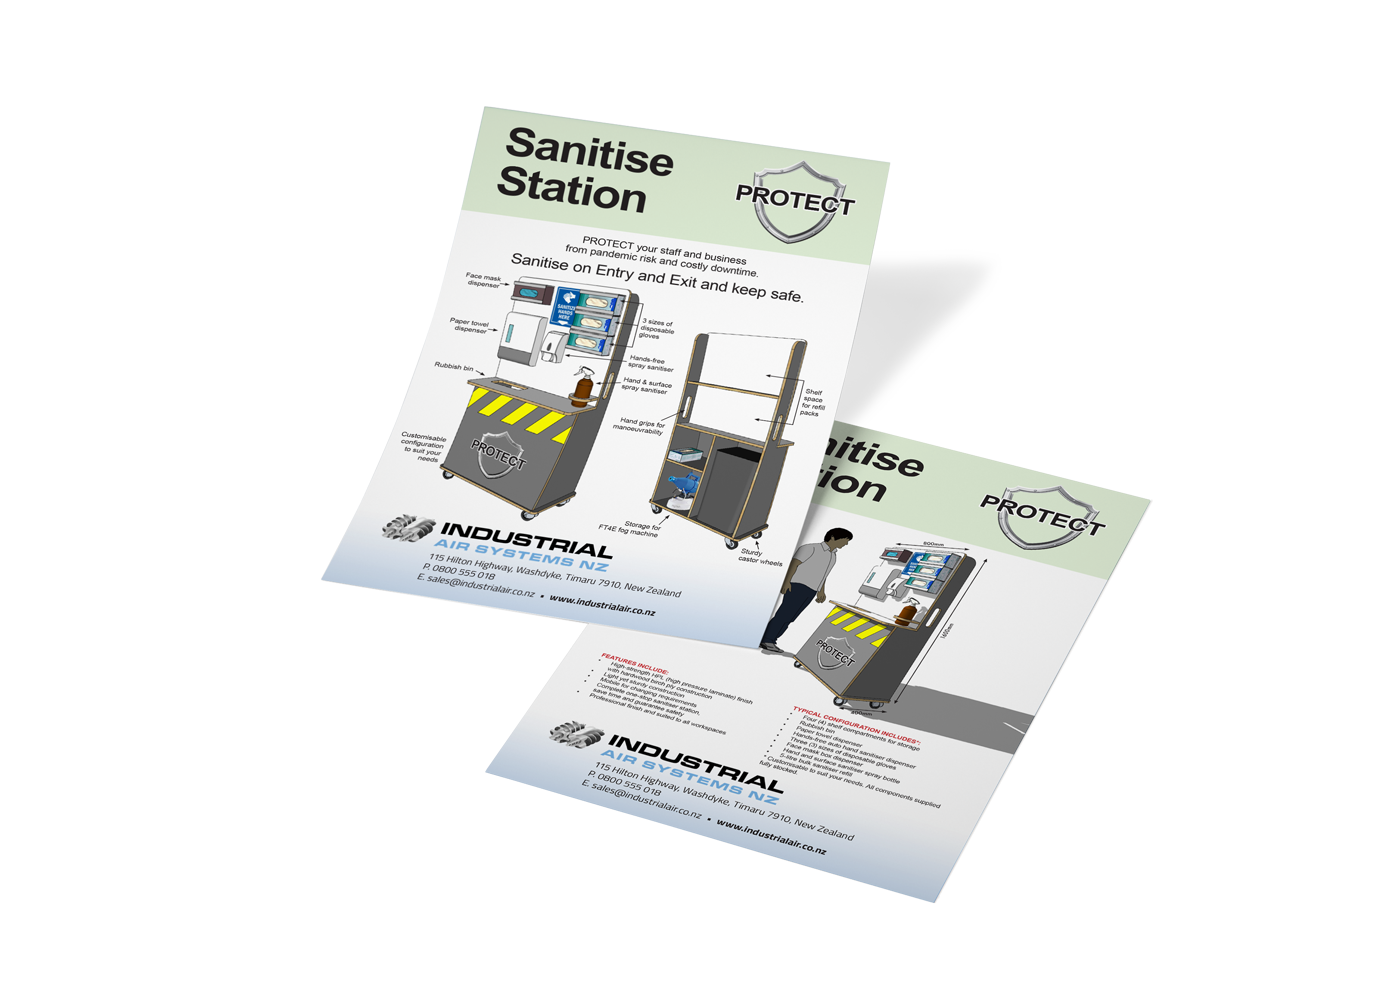 Sanitise station brochure